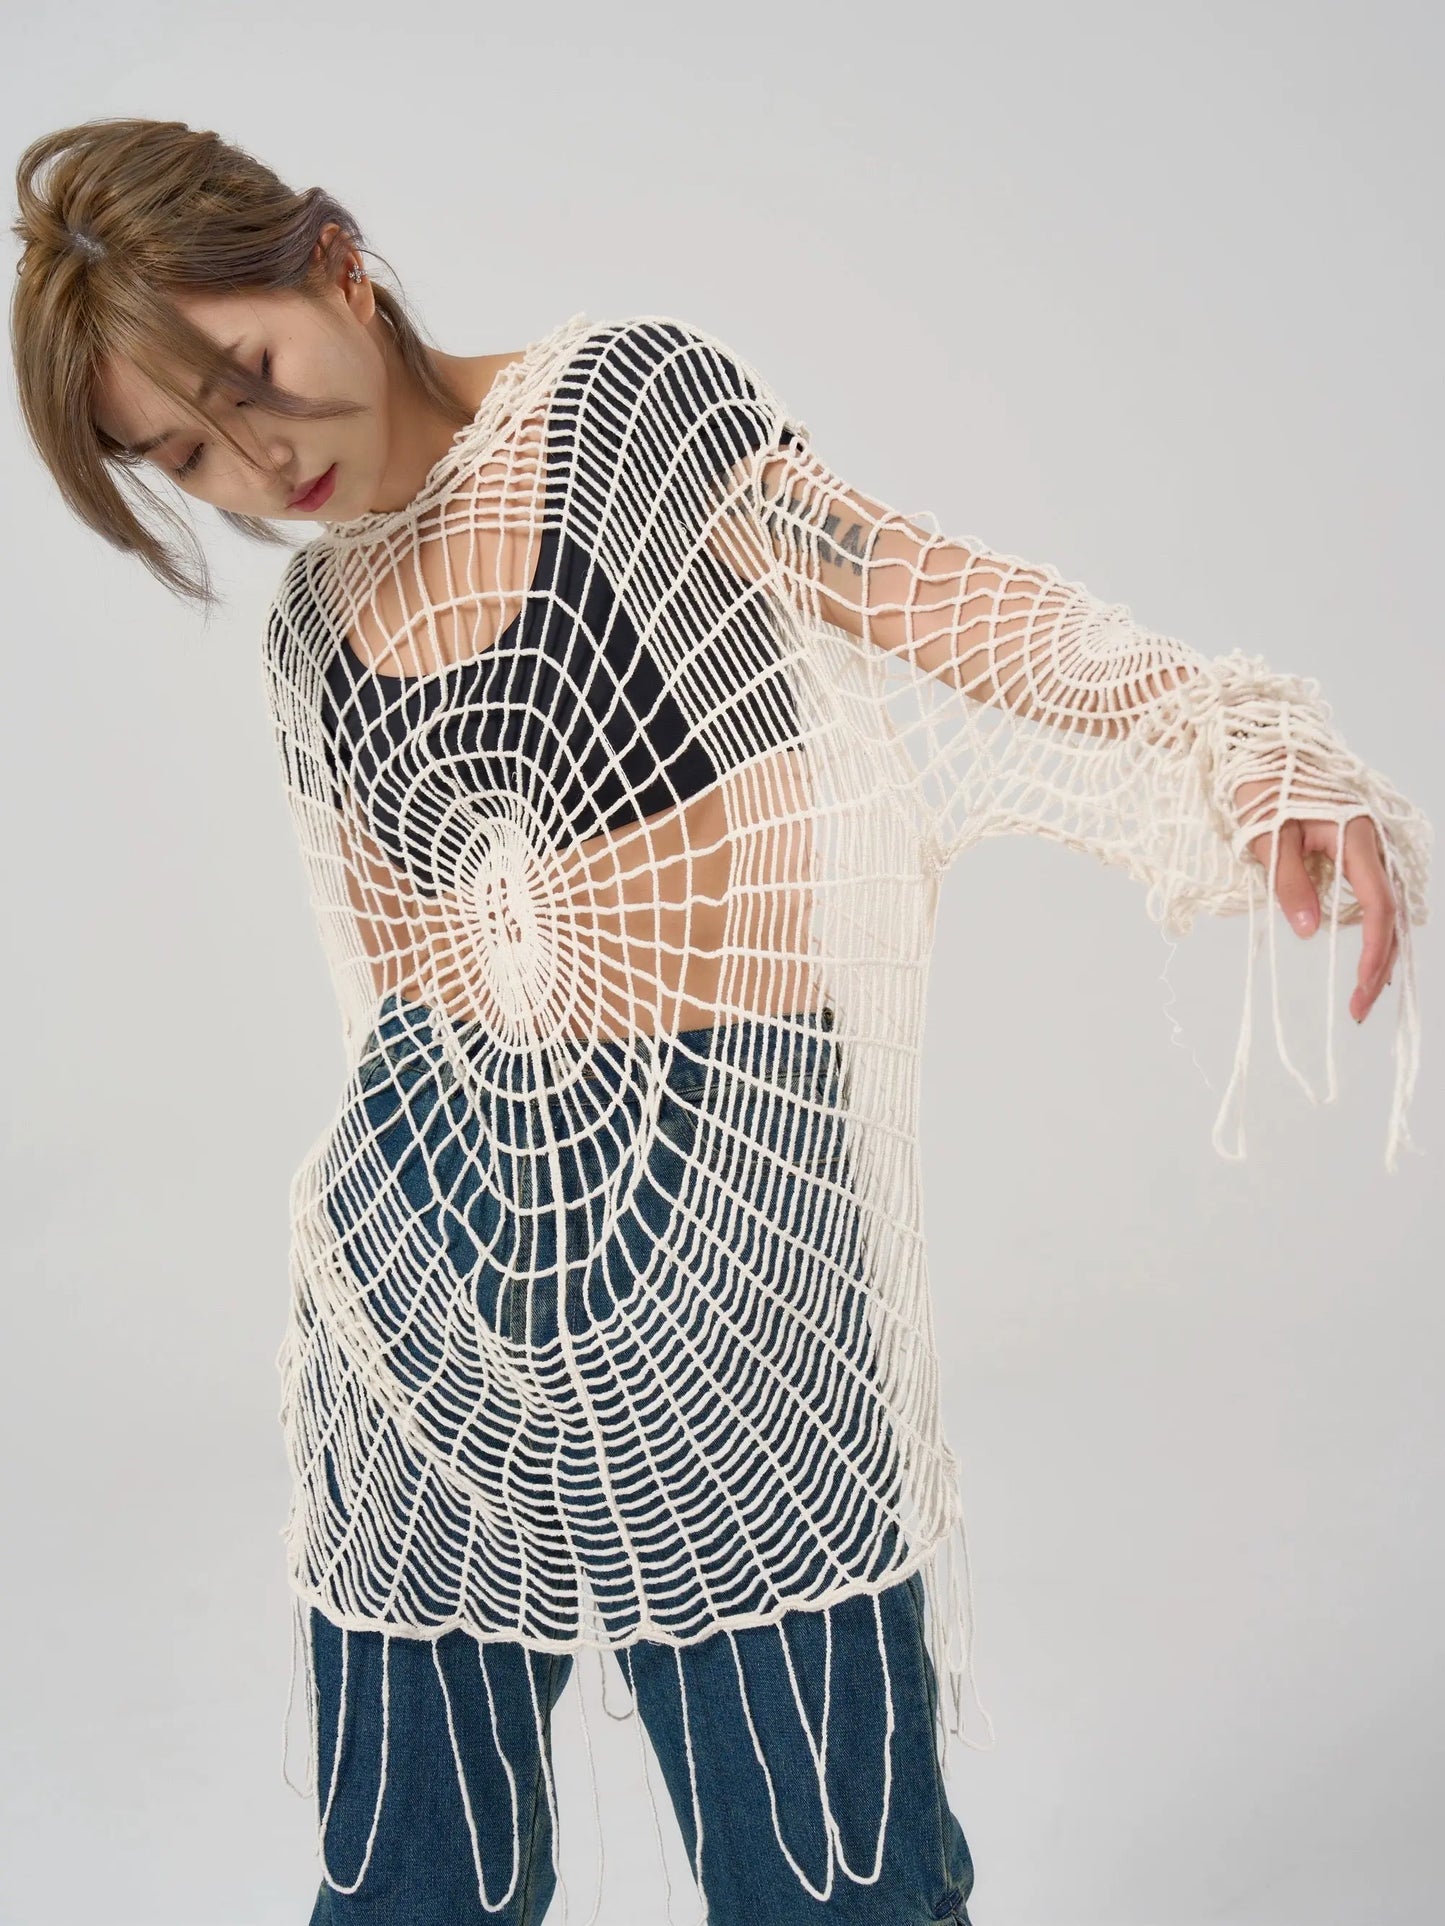 'Amnesia' Spider Web Crochet Smock top AlielNosirrah